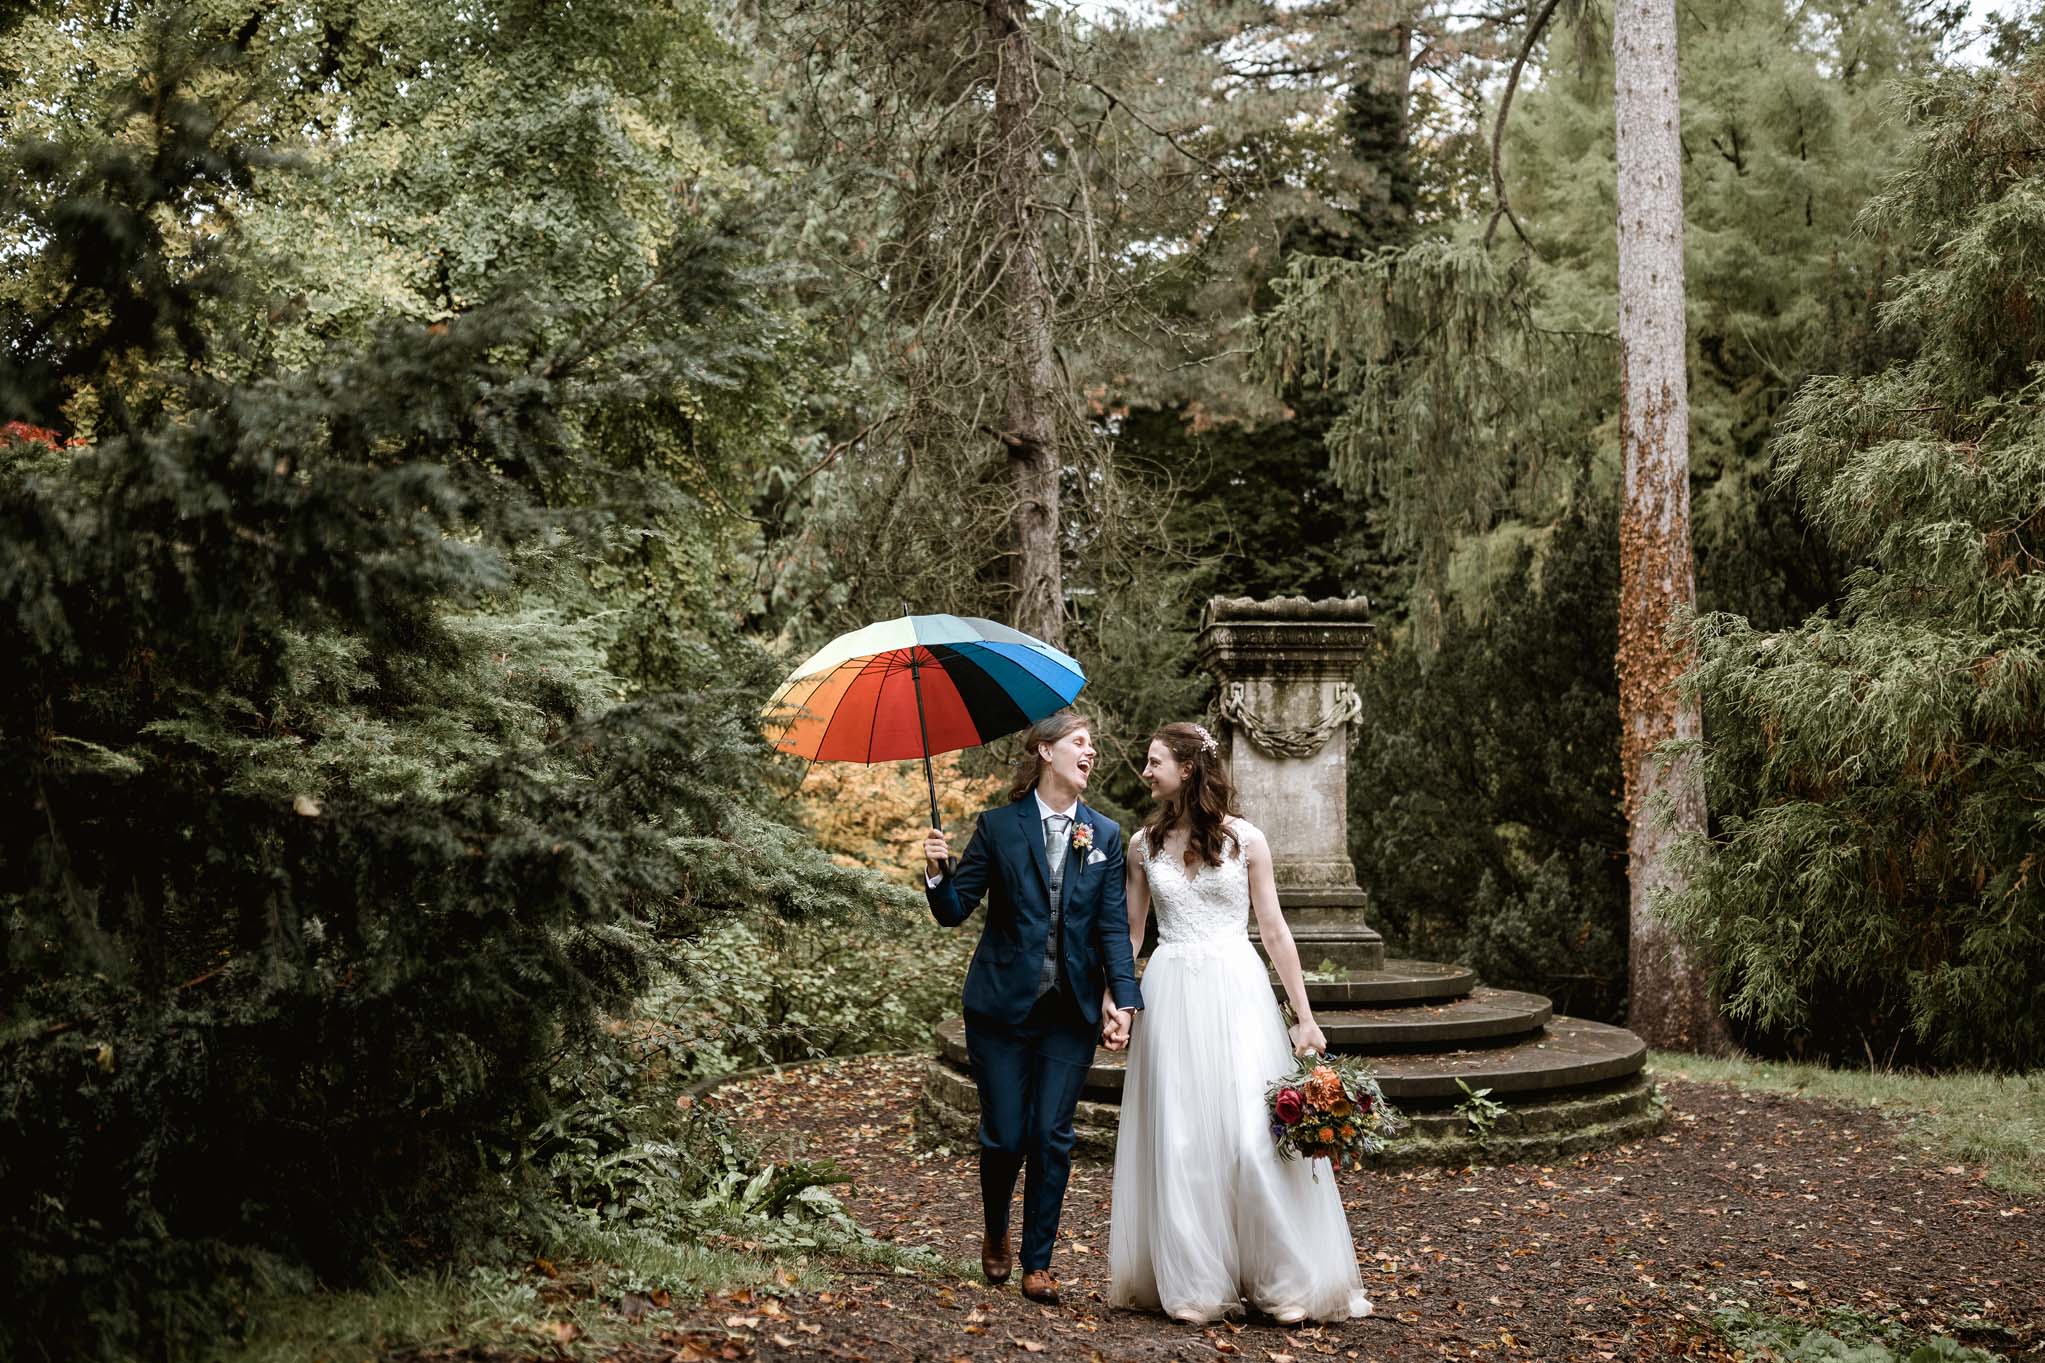 Wedding couple pose with umbrella